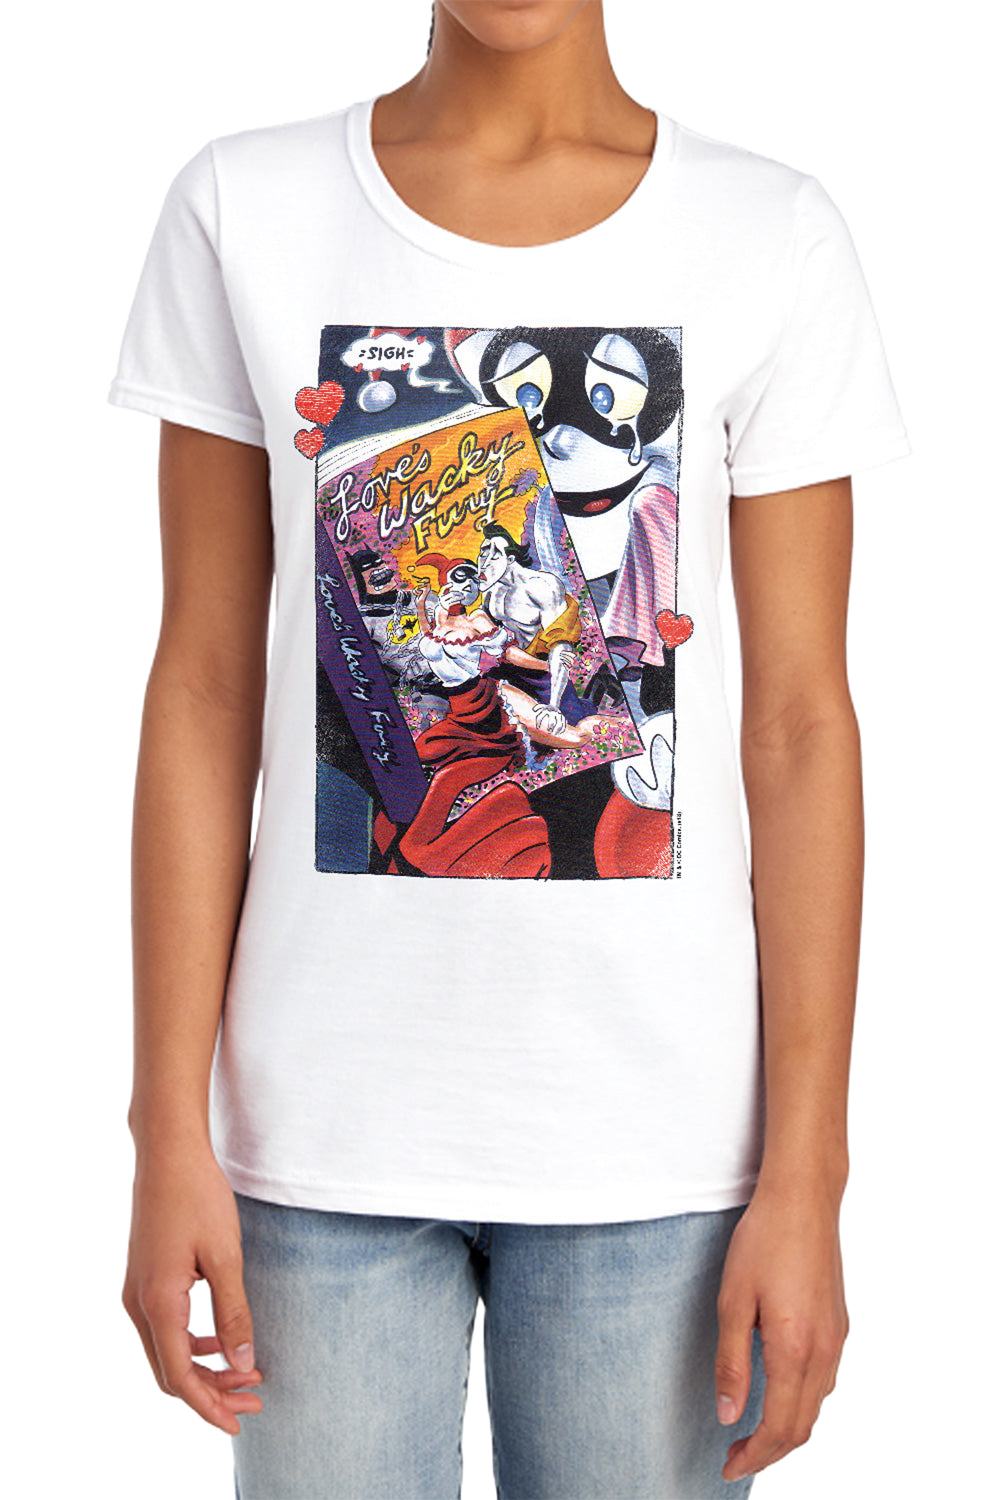 Harley Quinn Loves Wacky Fury - Women's T-Shirt Women's T-Shirt Harley Quinn   